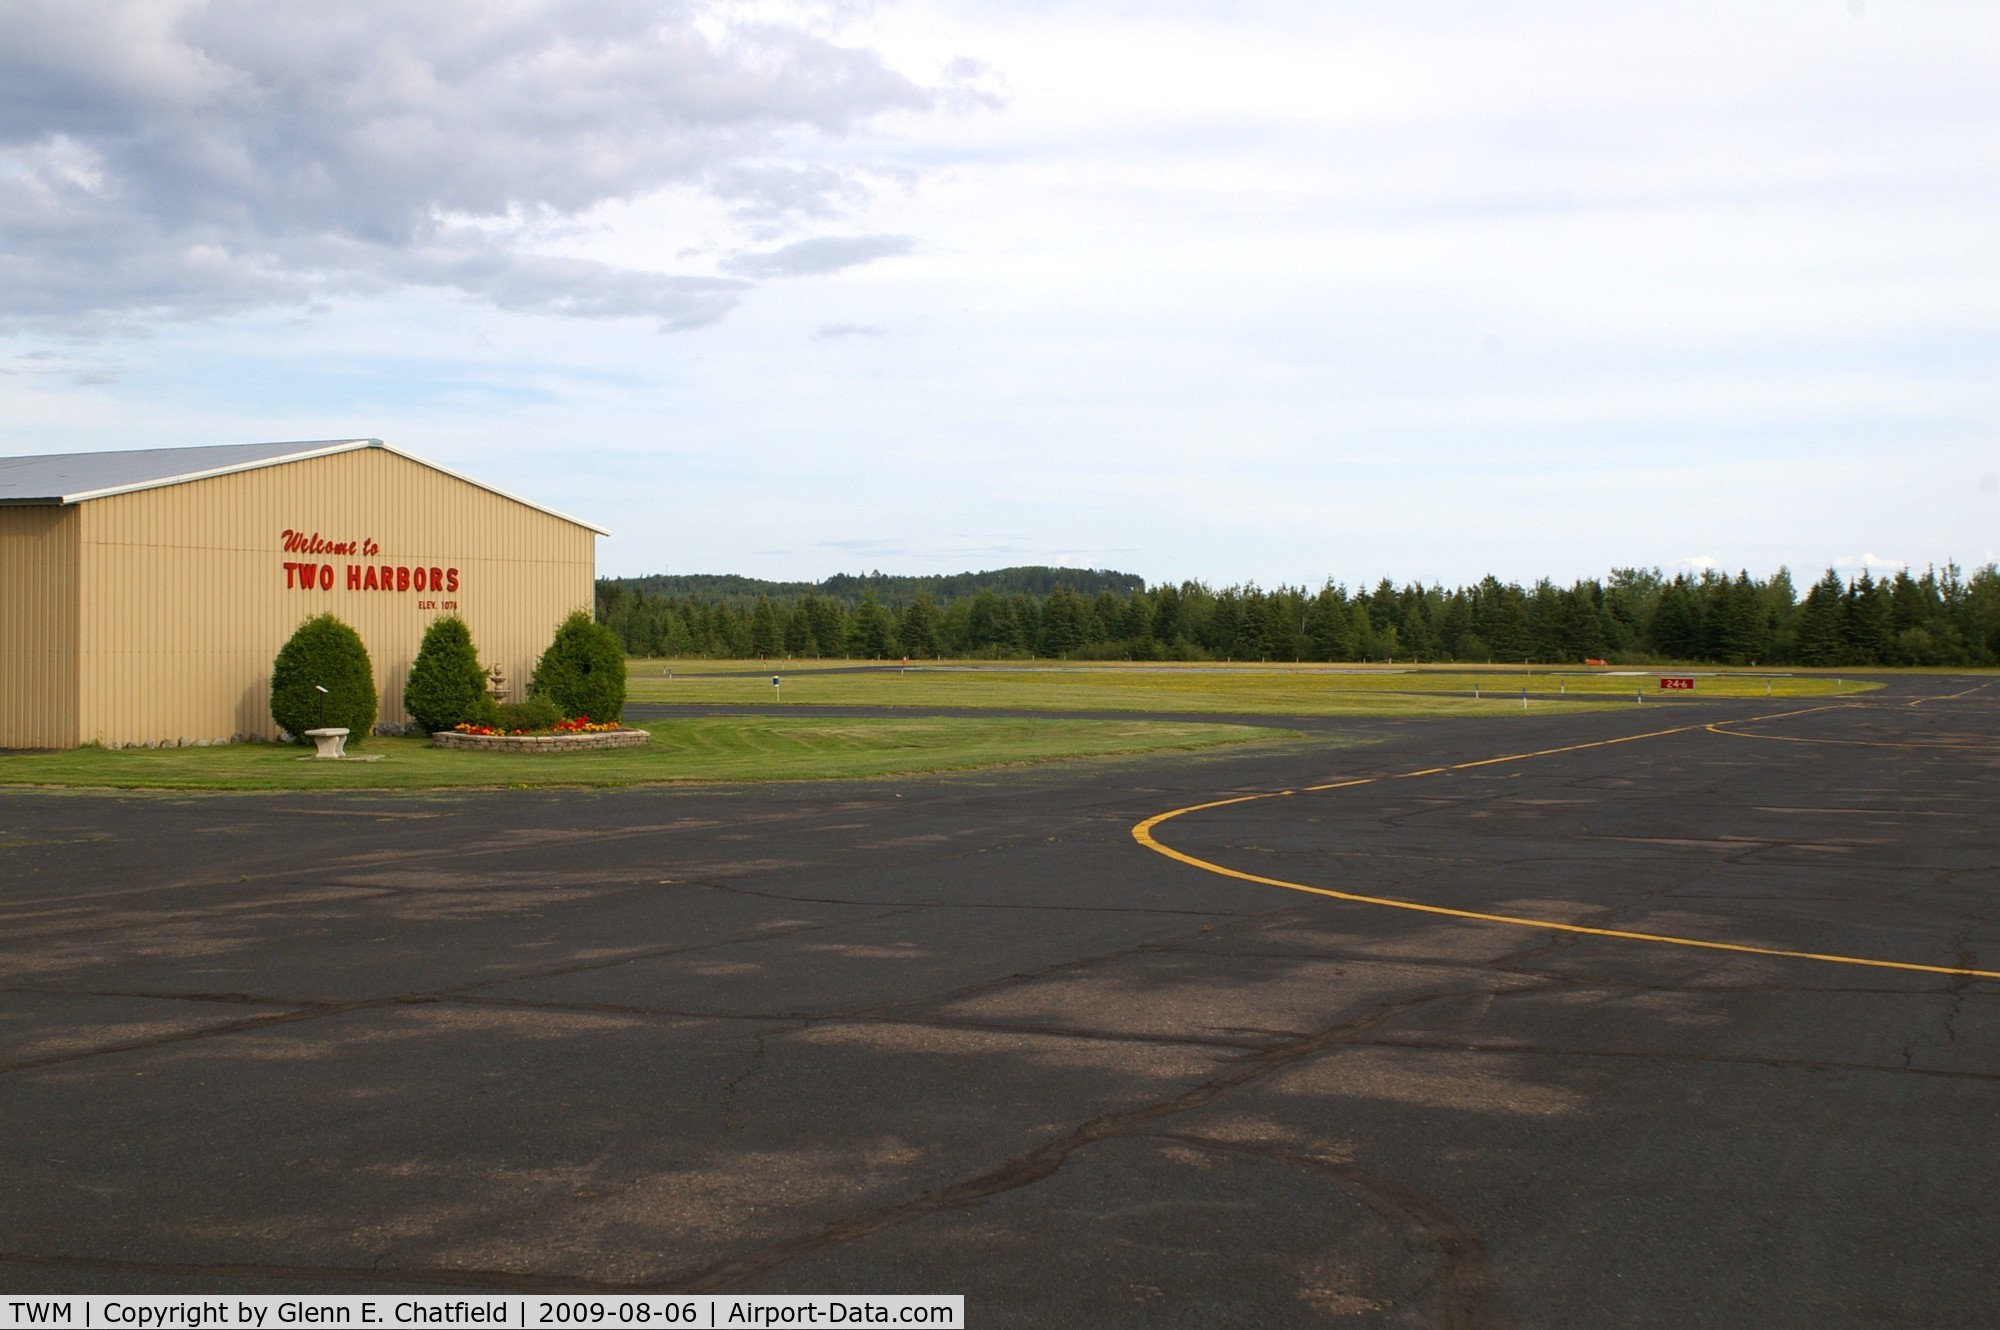 Richard B Helgeson Airport (TWM) - Main hangar